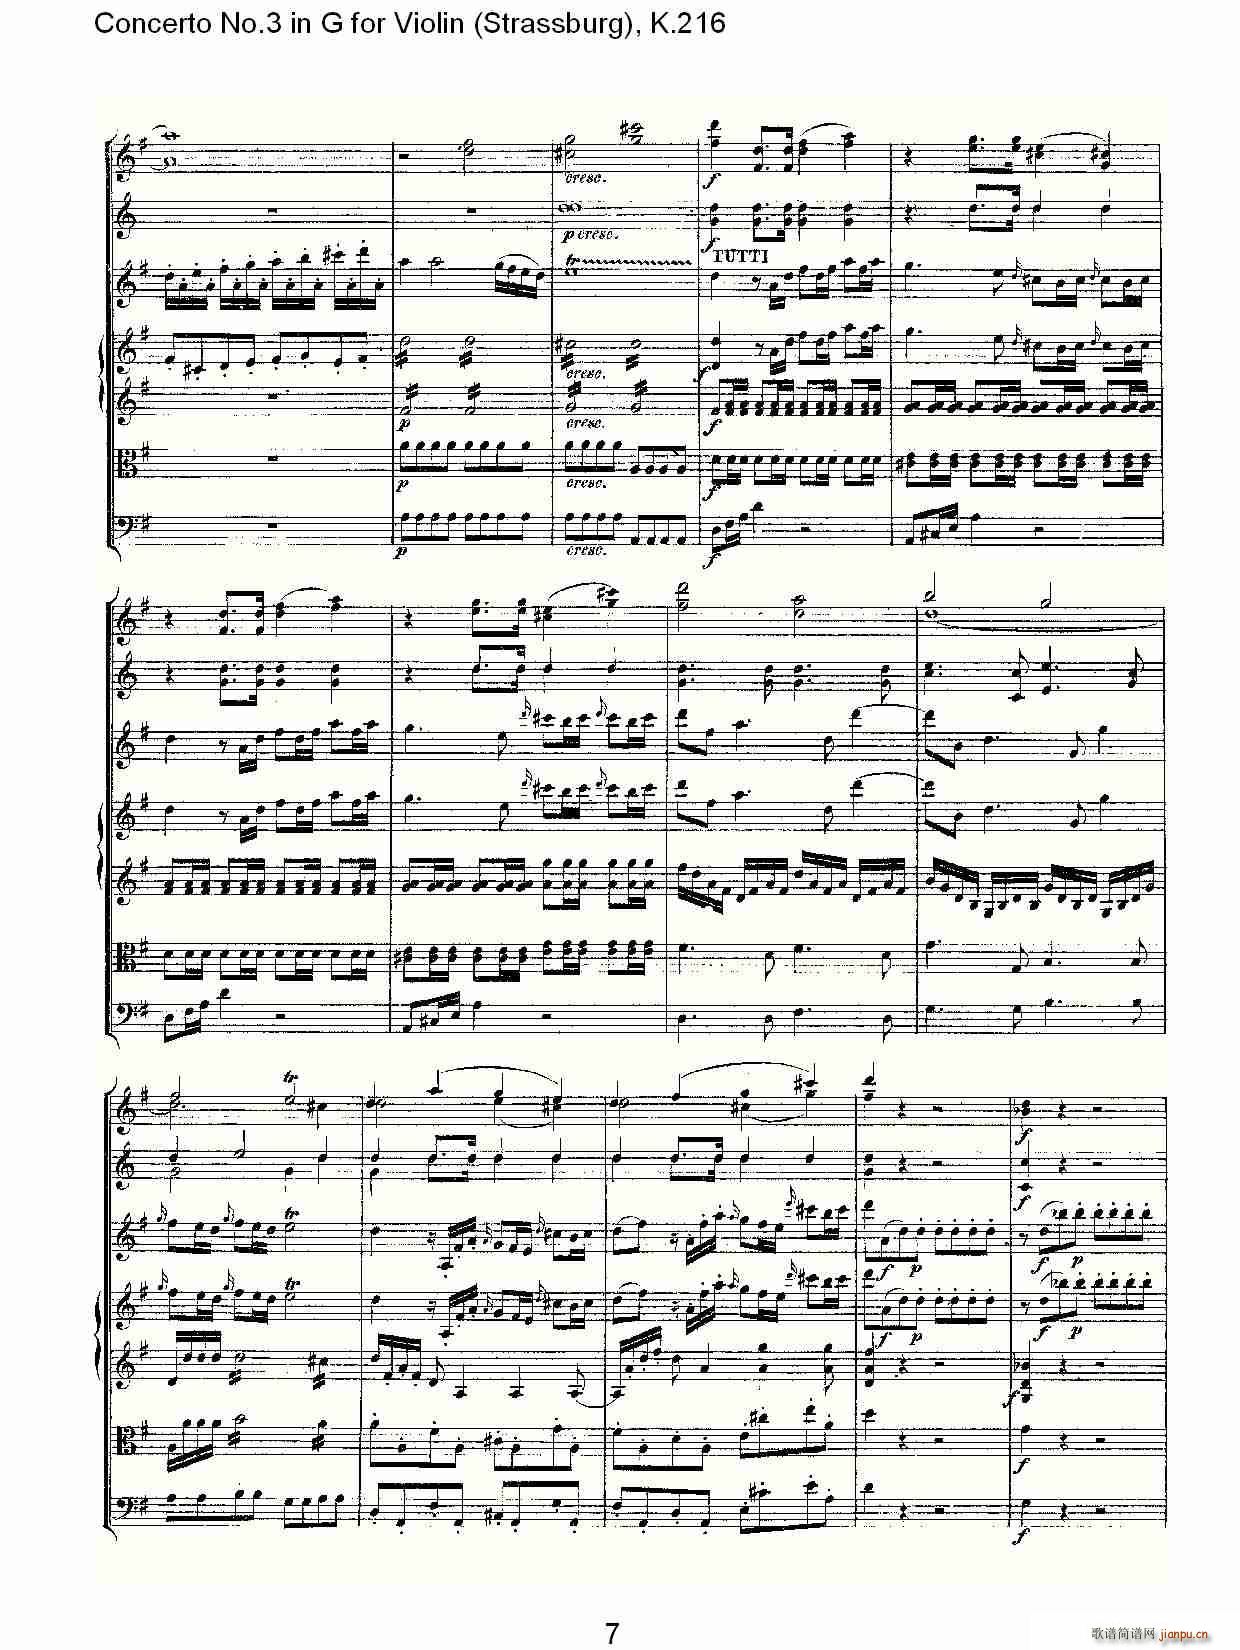 Concerto No.3 in G for Violin K.216(С)7